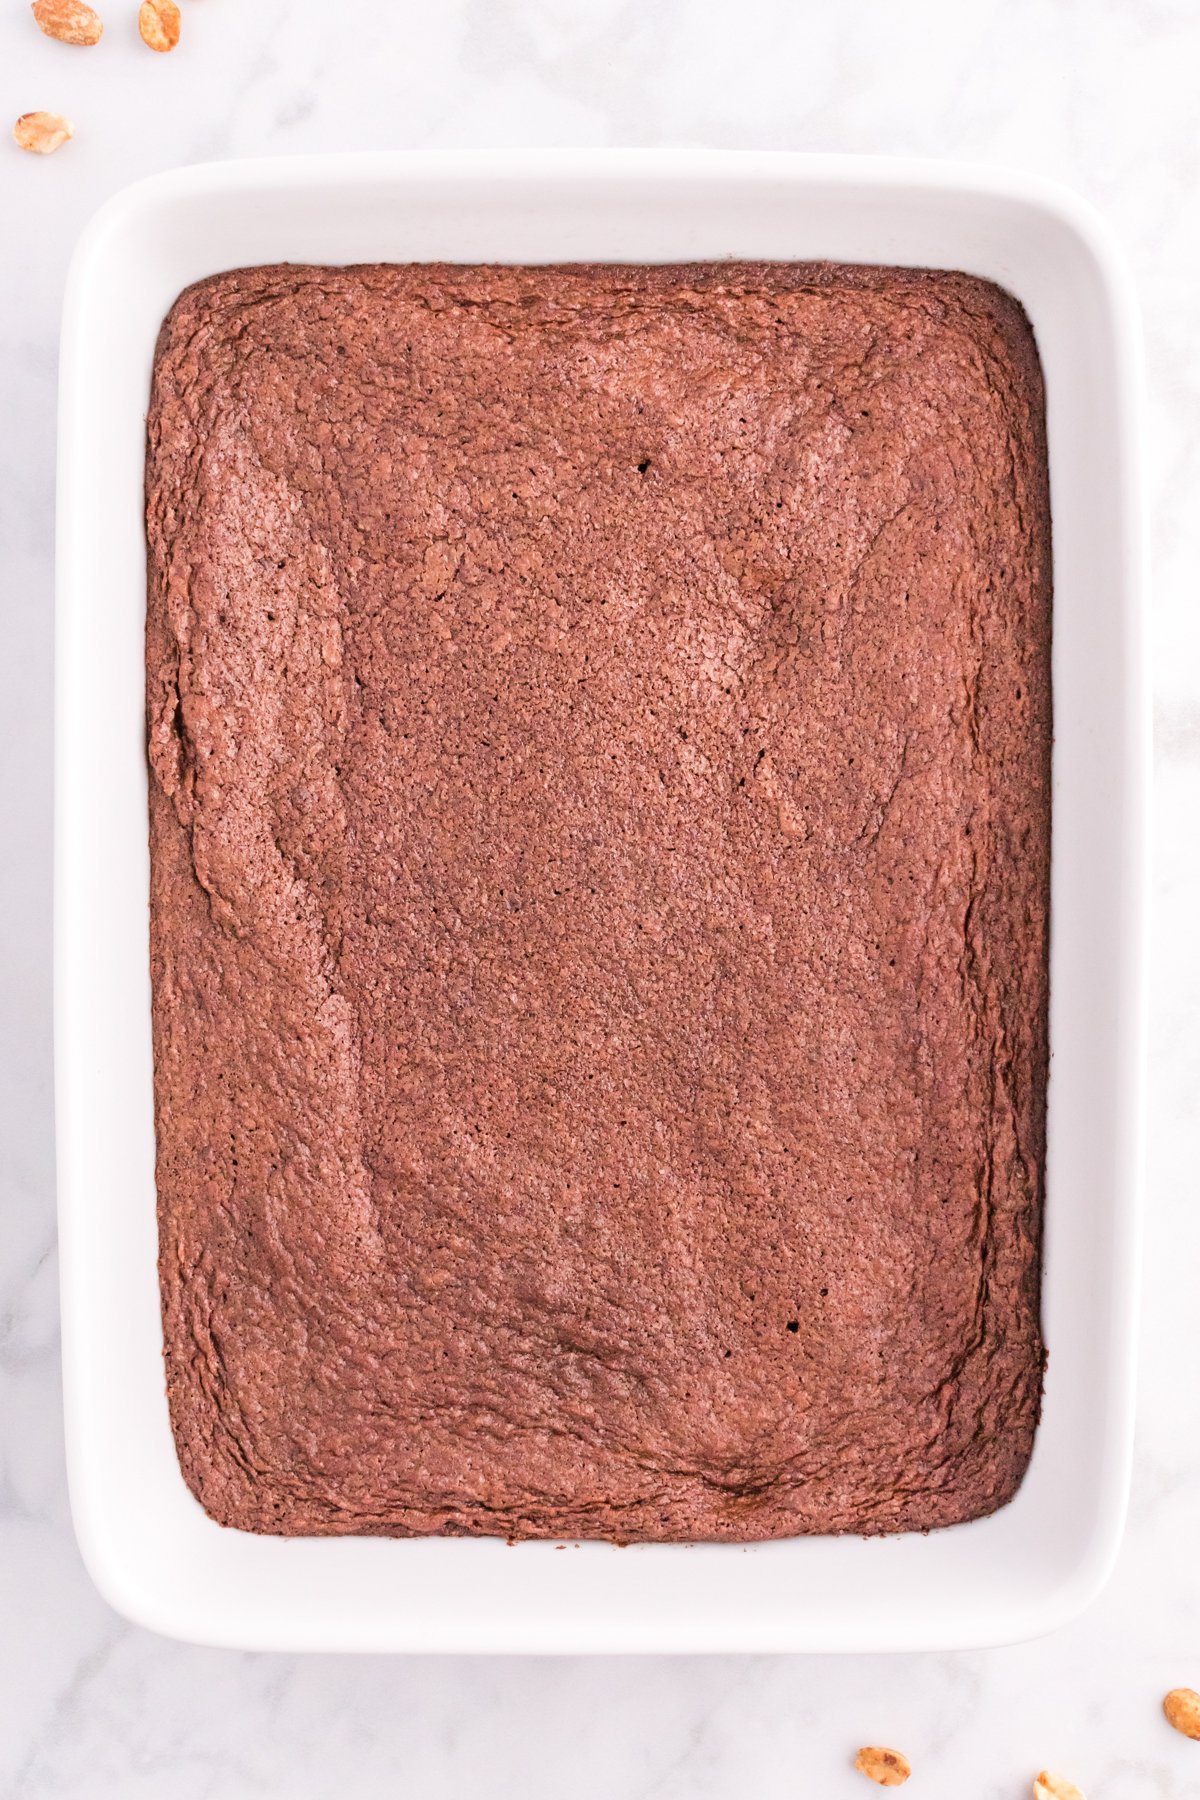 baked brownies in a baking pan